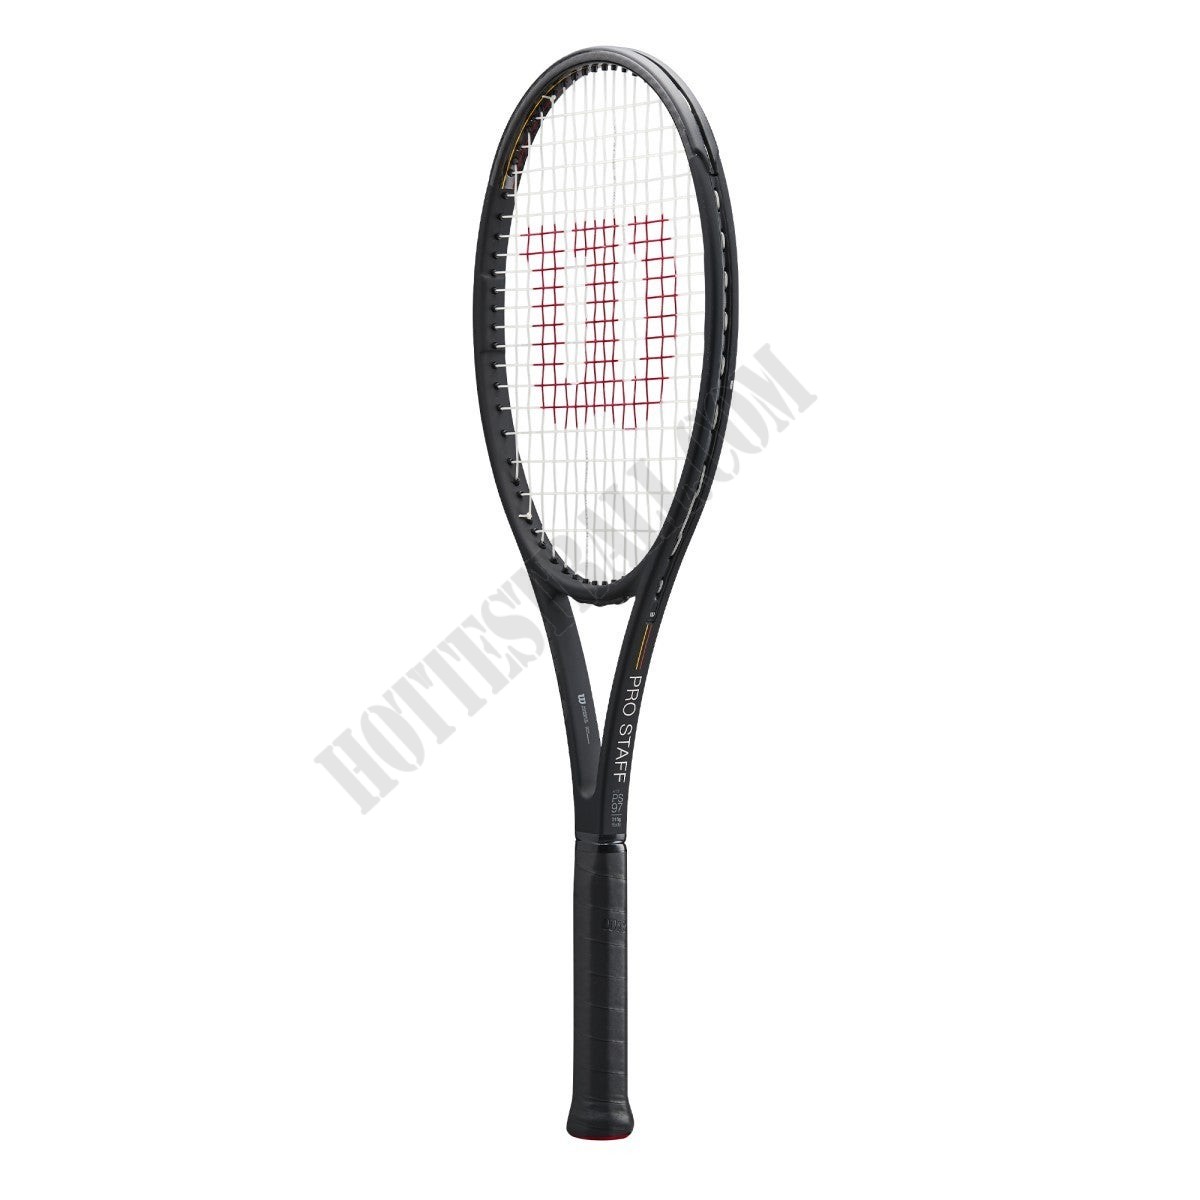 Pro Staff 97 v13 Tennis Racket - Wilson Discount Store - -3